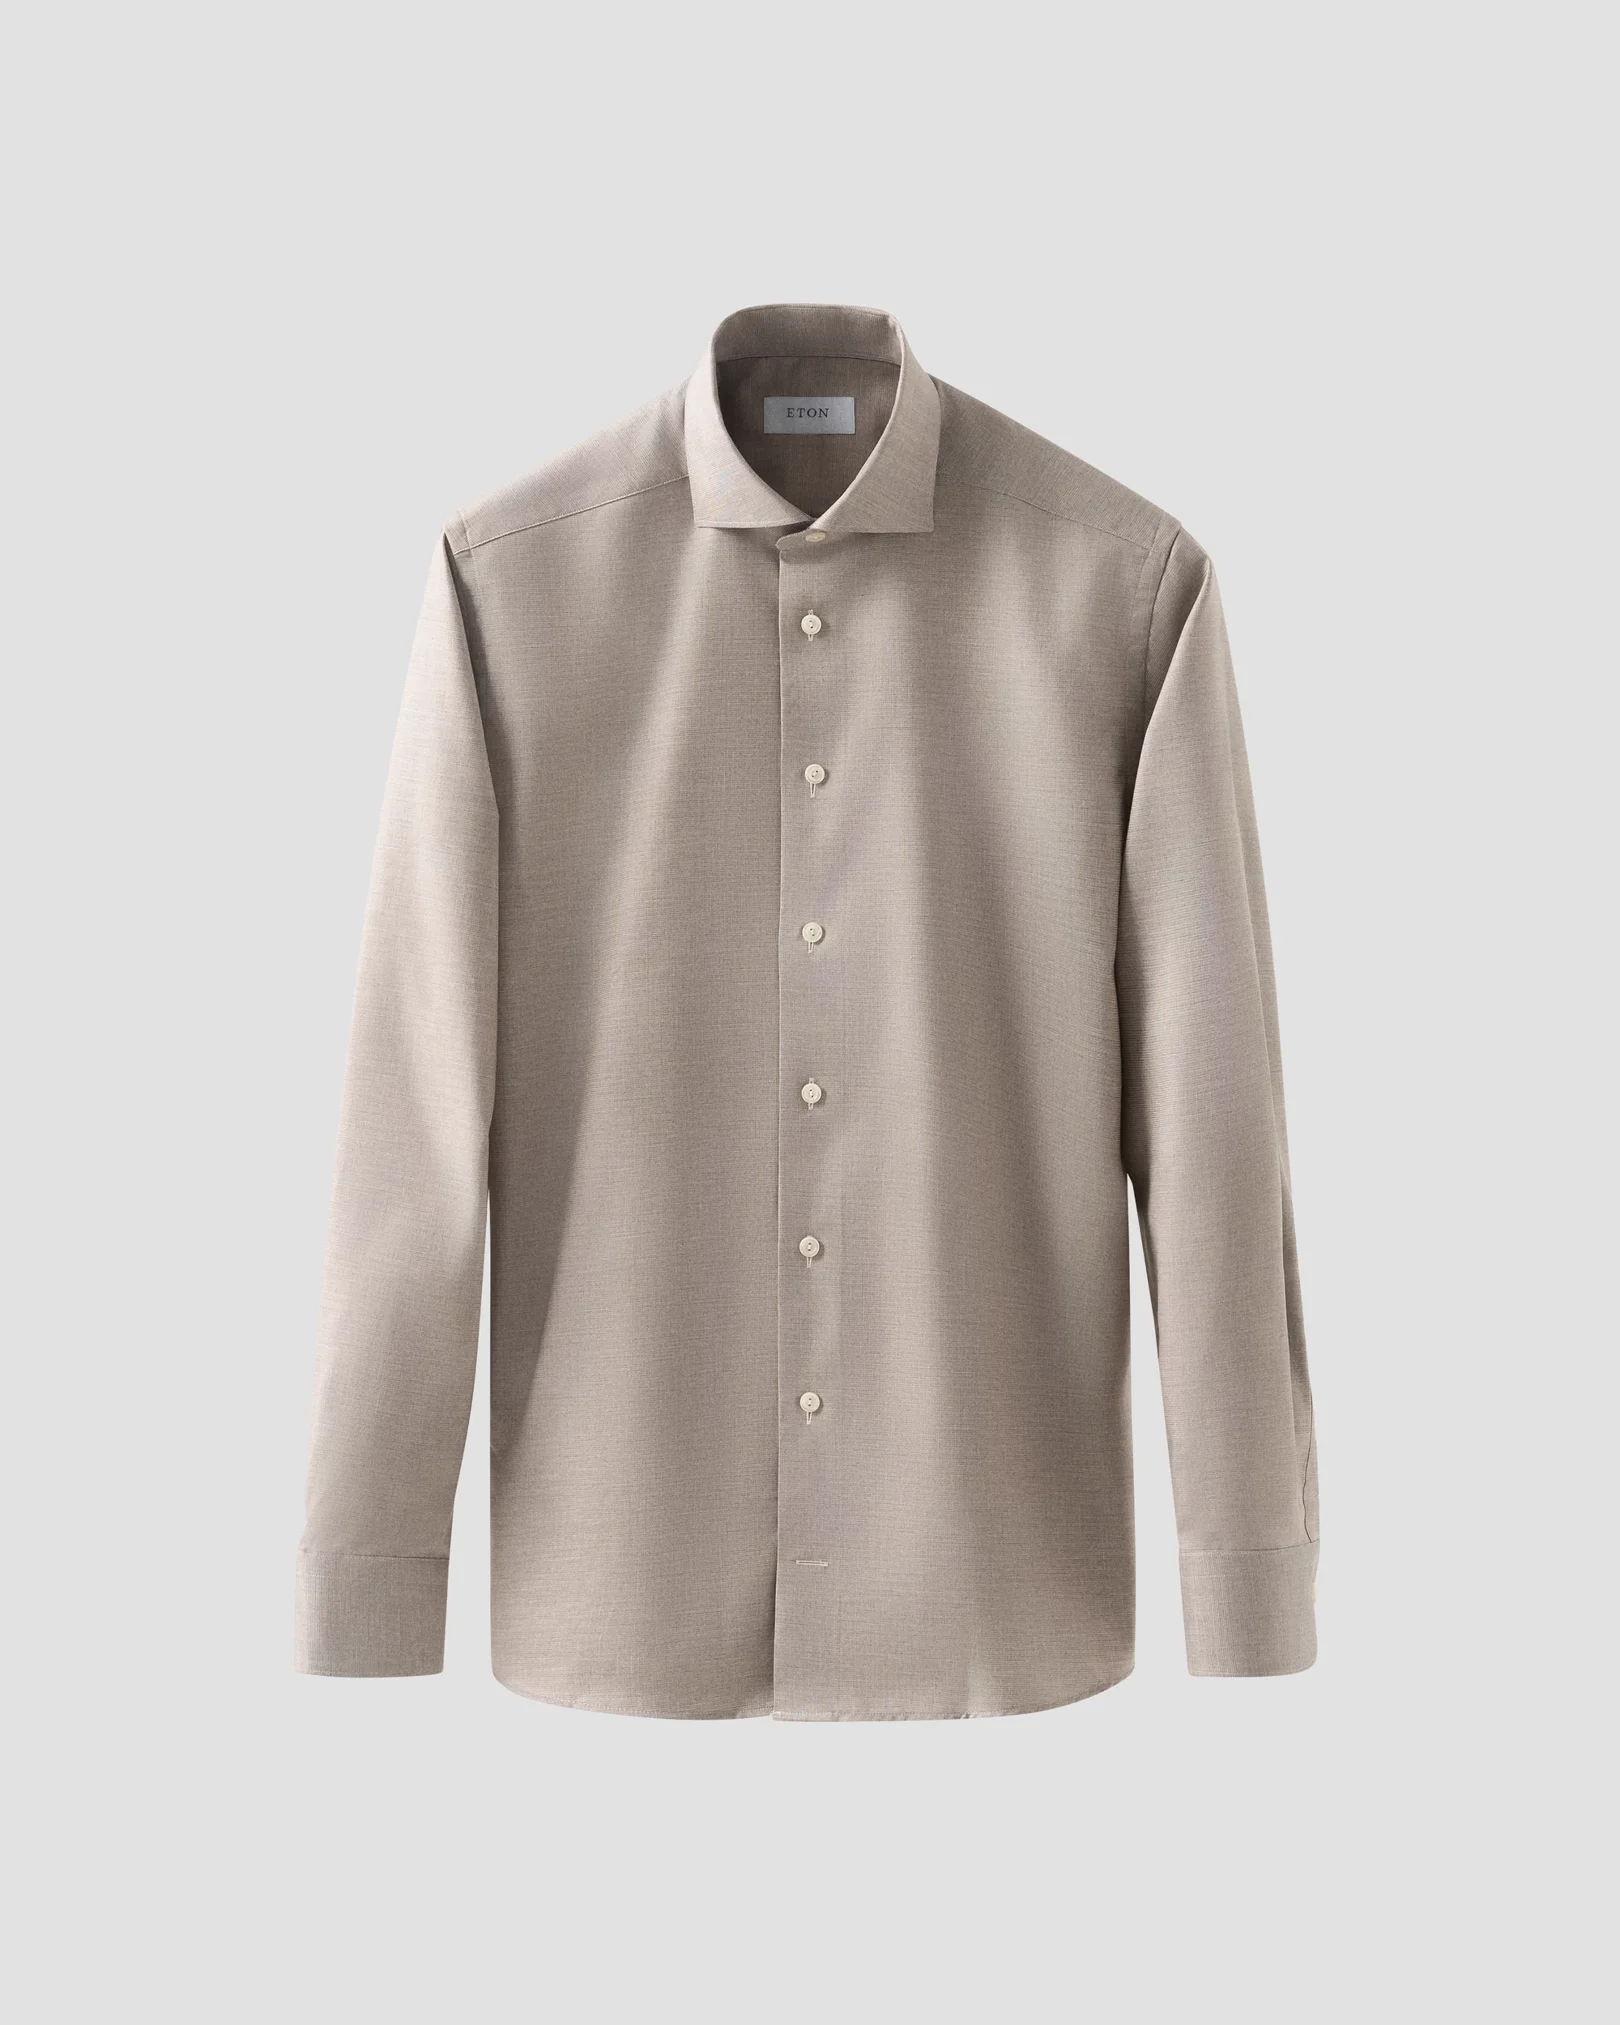 Eton - beige twill wide spread shirt